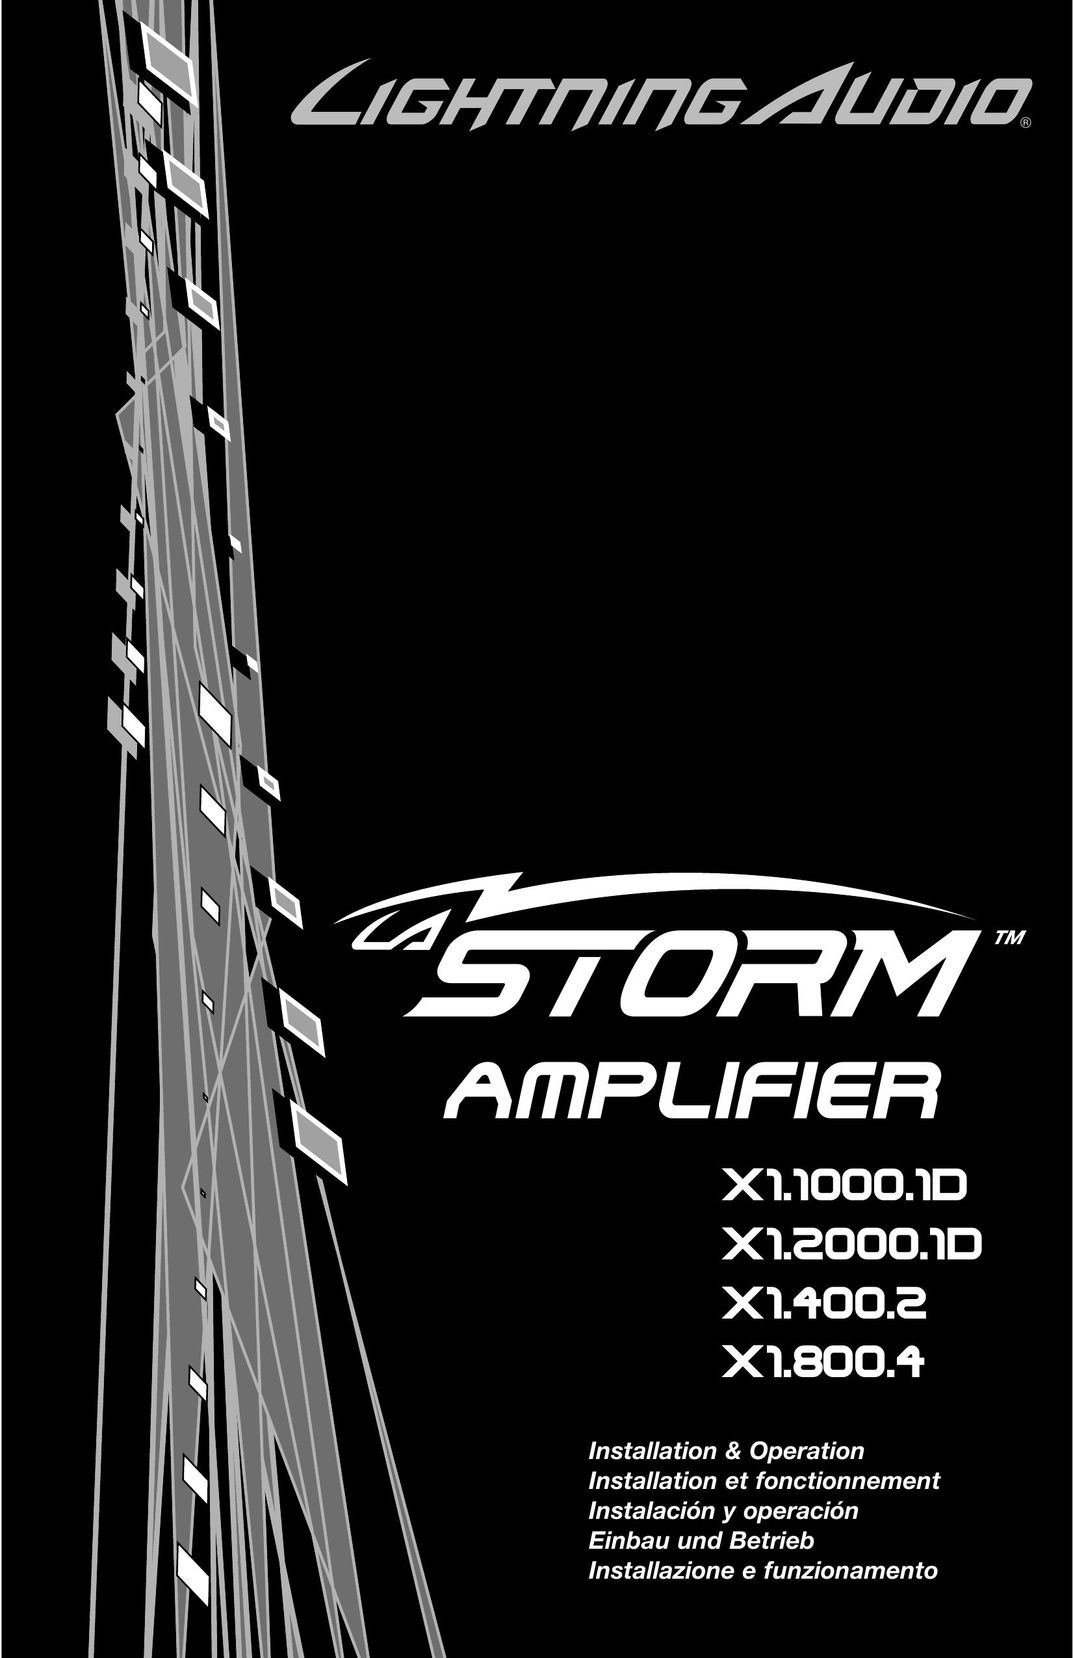 Lightning Audio X1.800.4 Stereo Amplifier User Manual